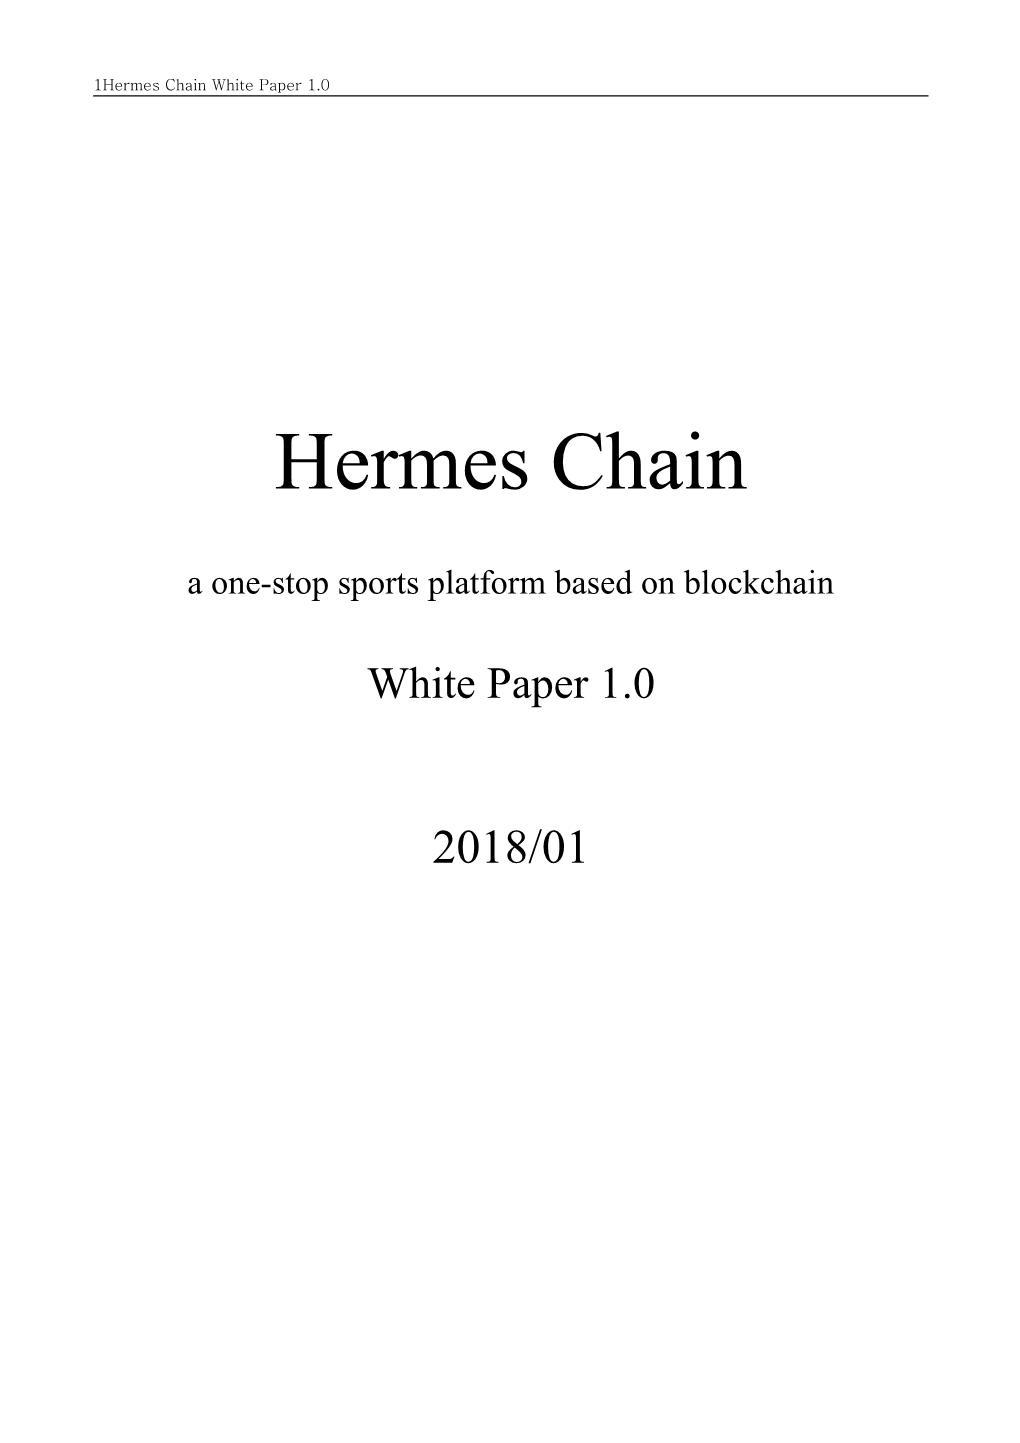 Hermes Chain White Paper 1.0